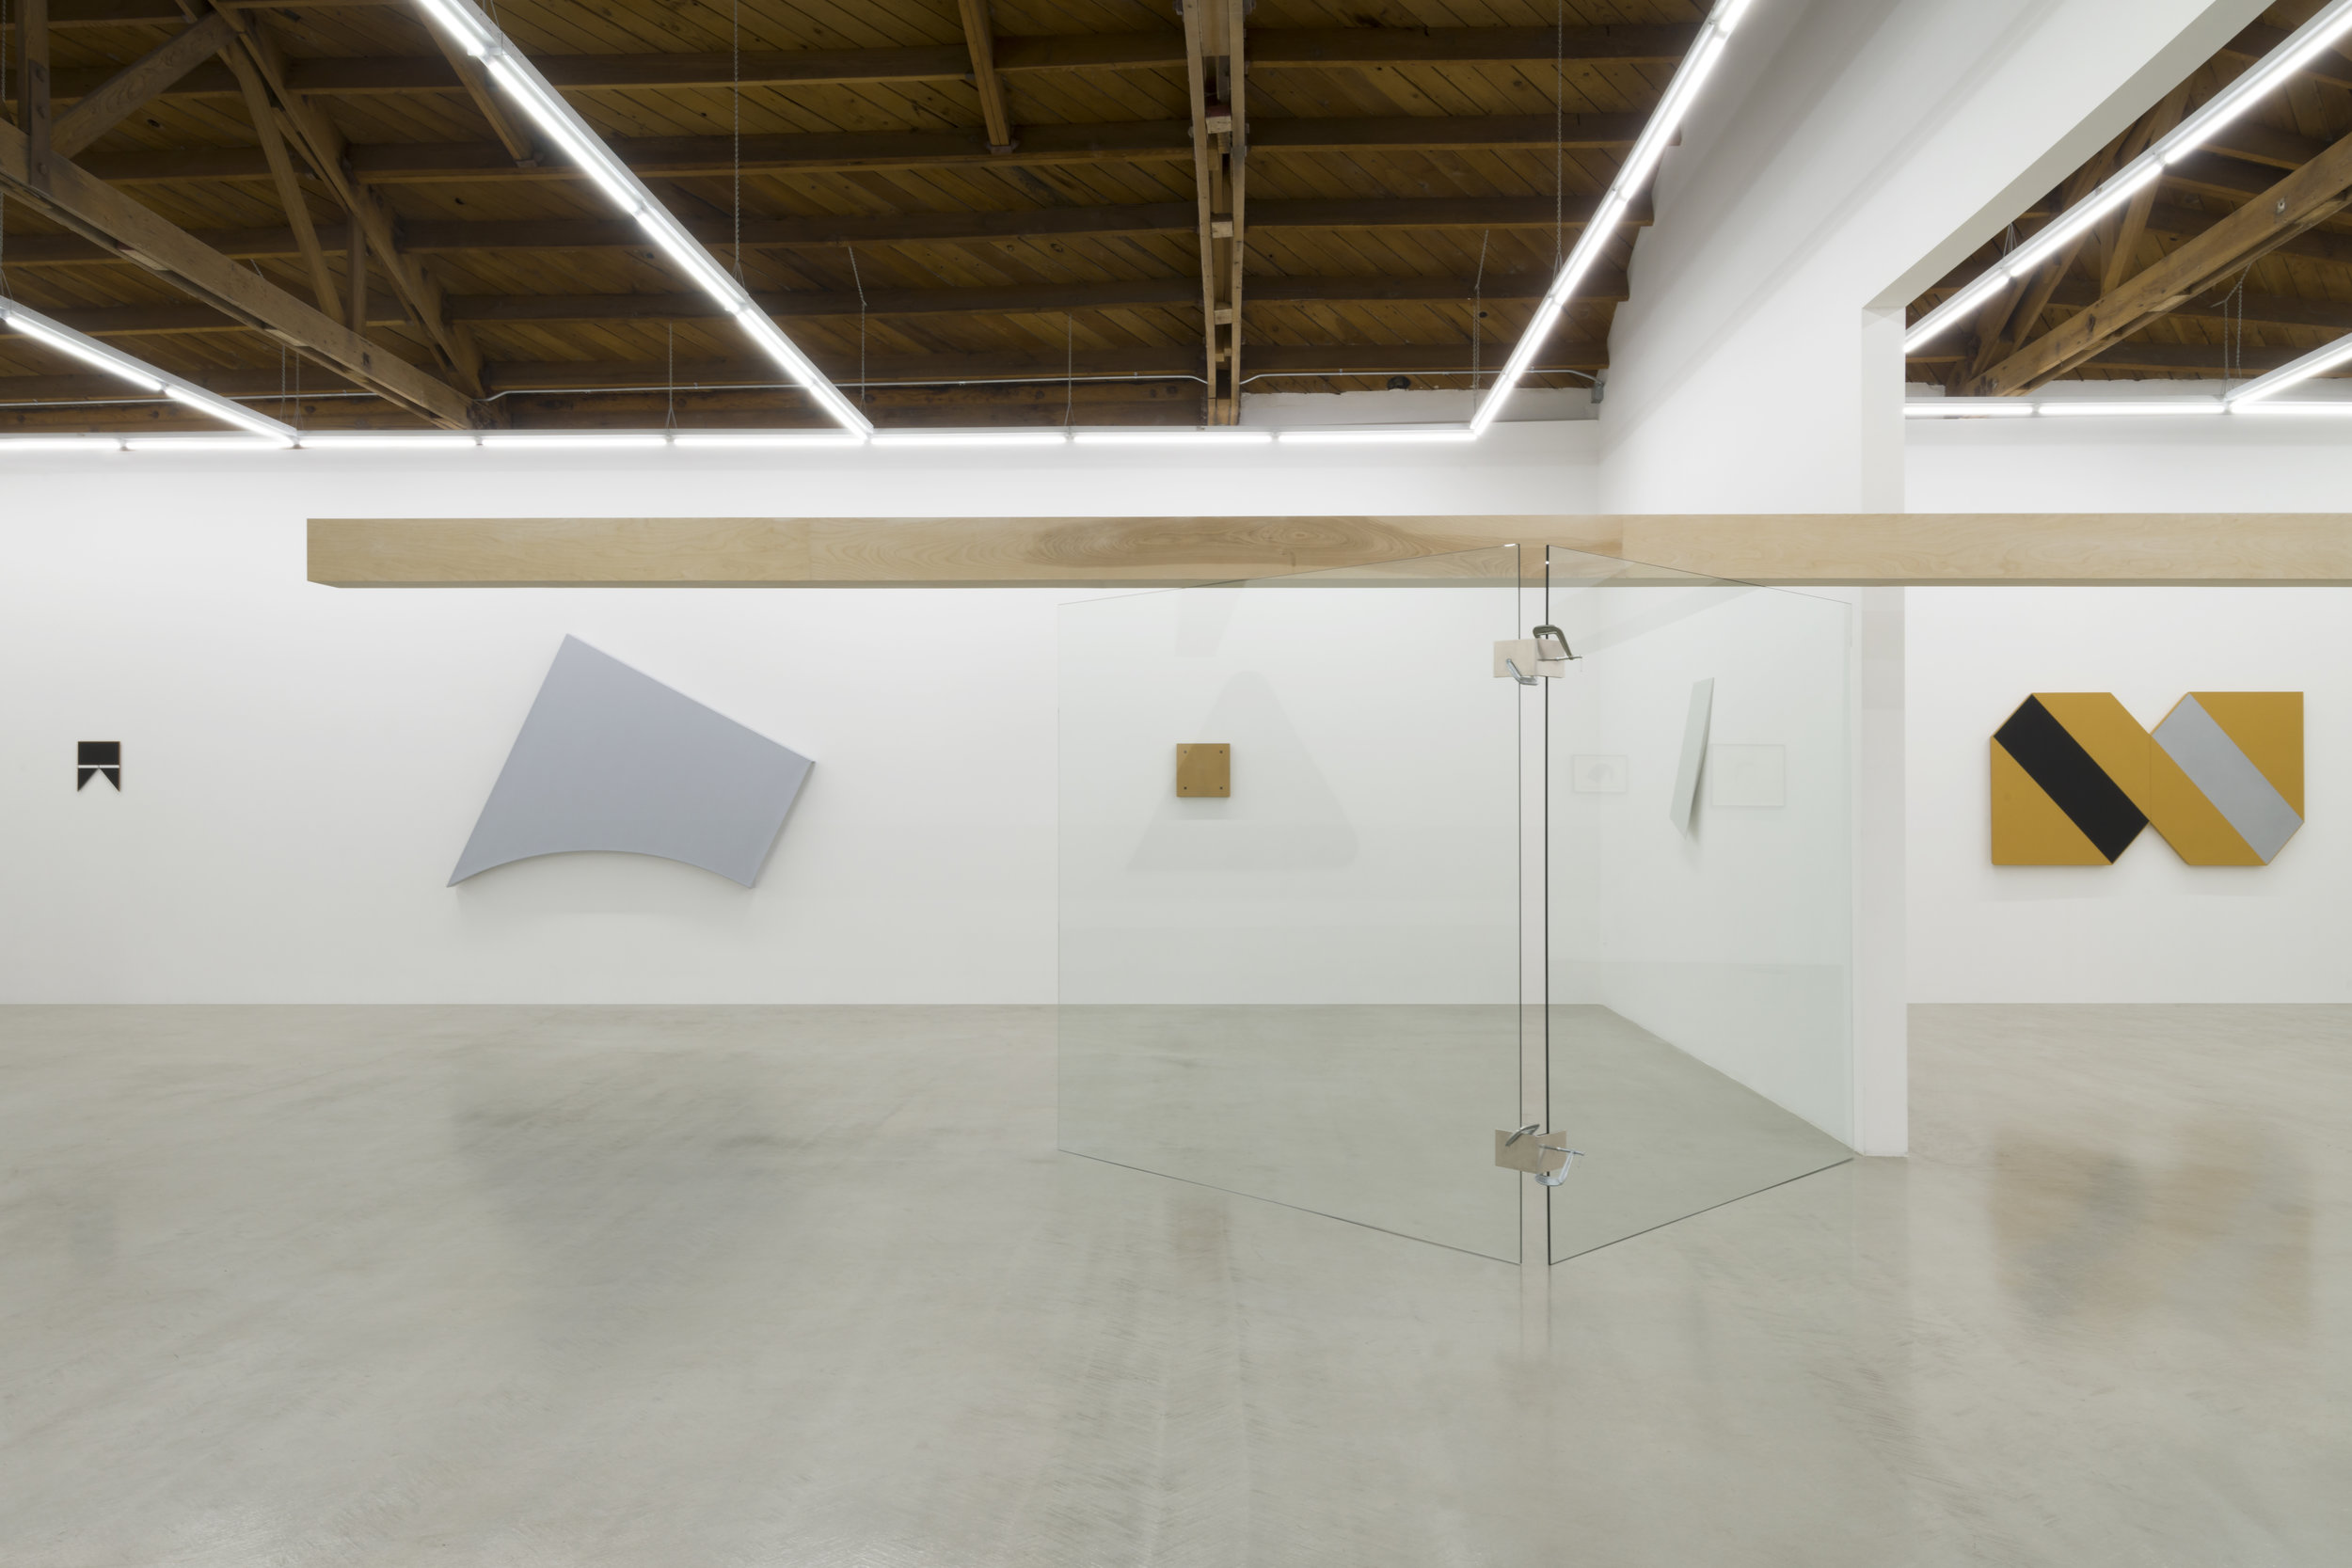   Parrasch Heijnen Gallery,&nbsp; Los Angeles 2017 